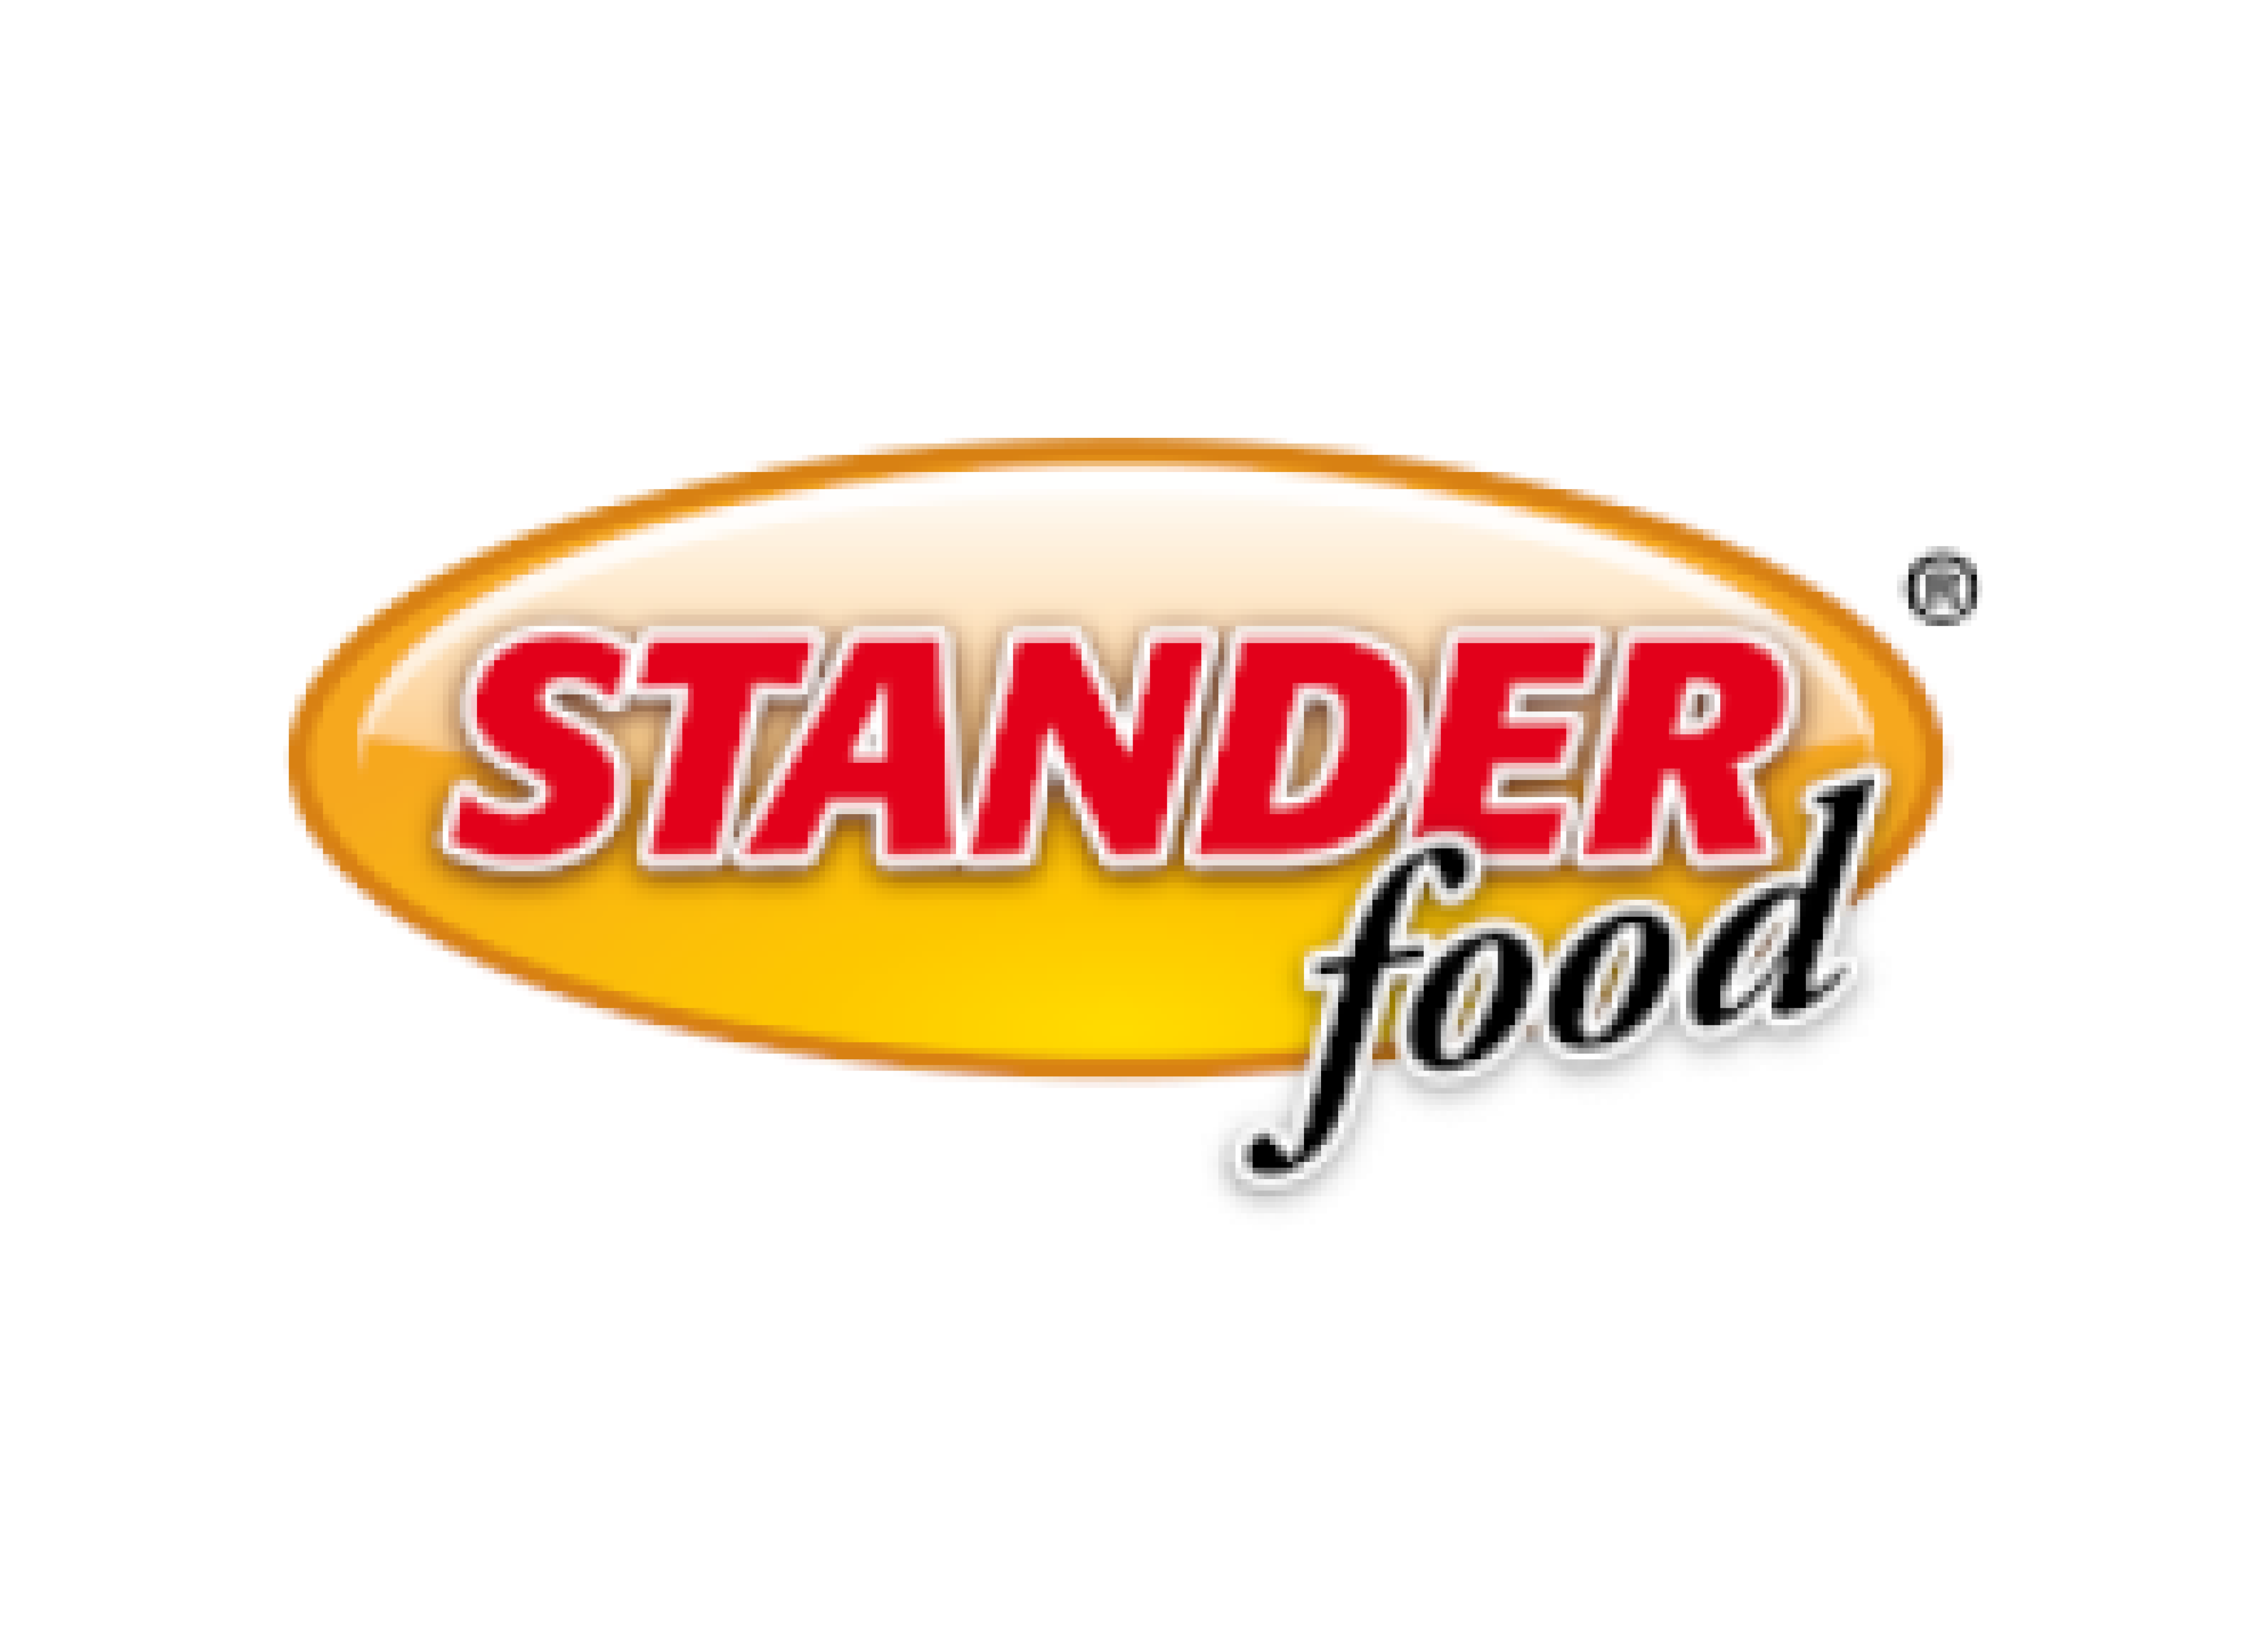 Stander